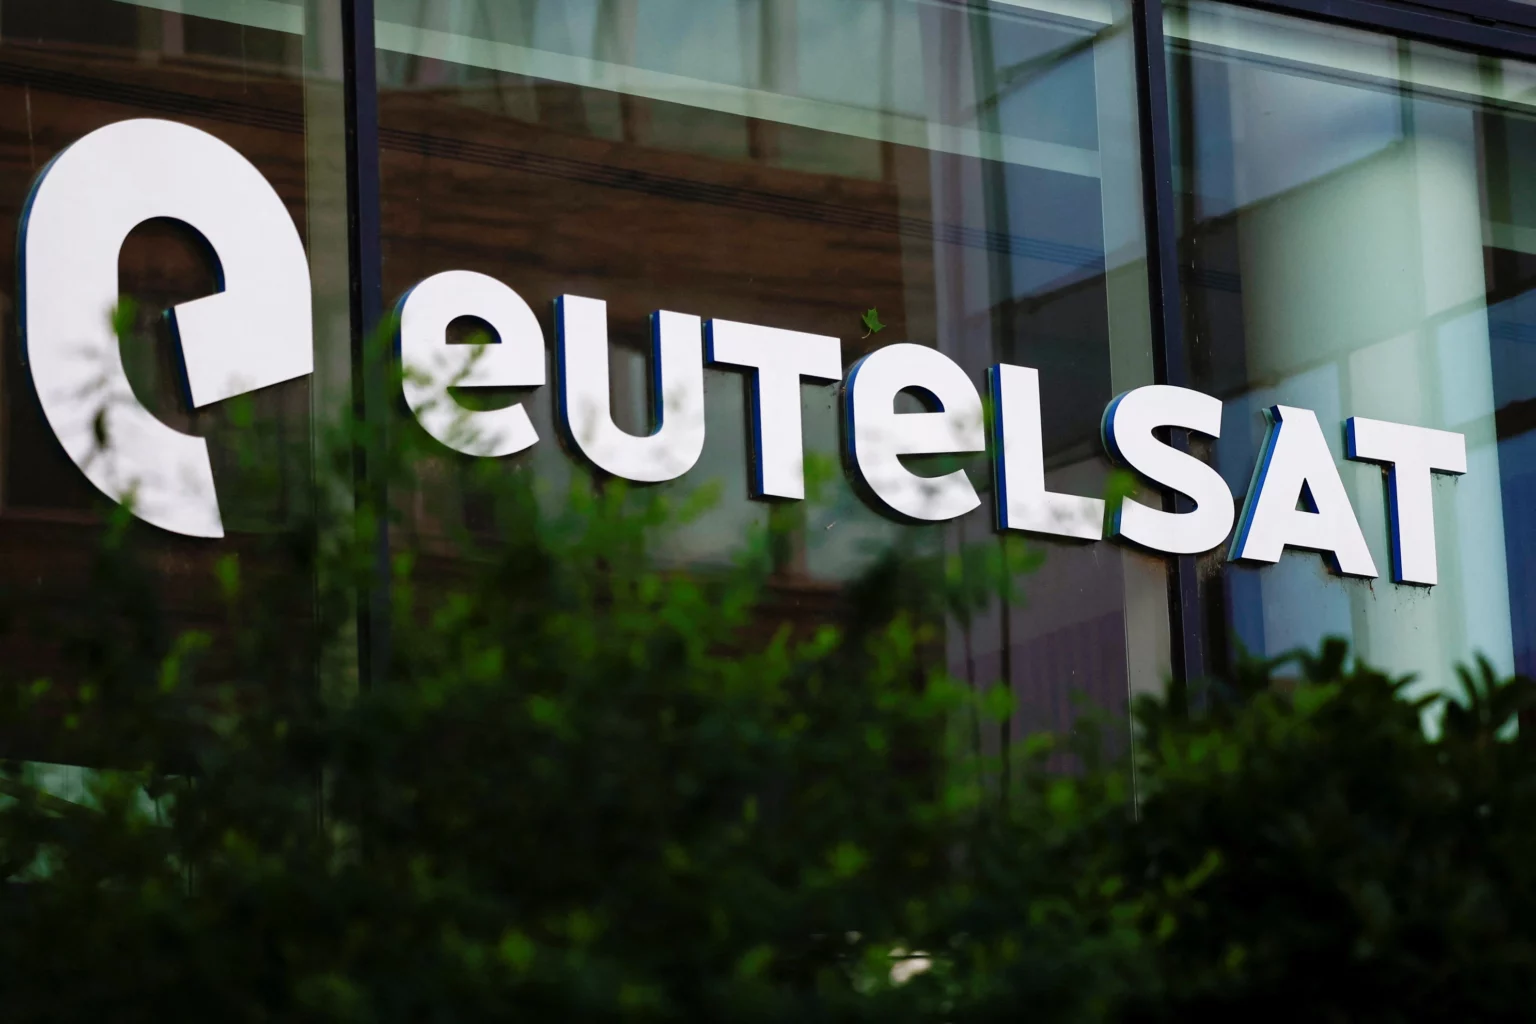 eutelsat-boss-says-nobody-wants-a-musk-monopoly-on-satellite-internet